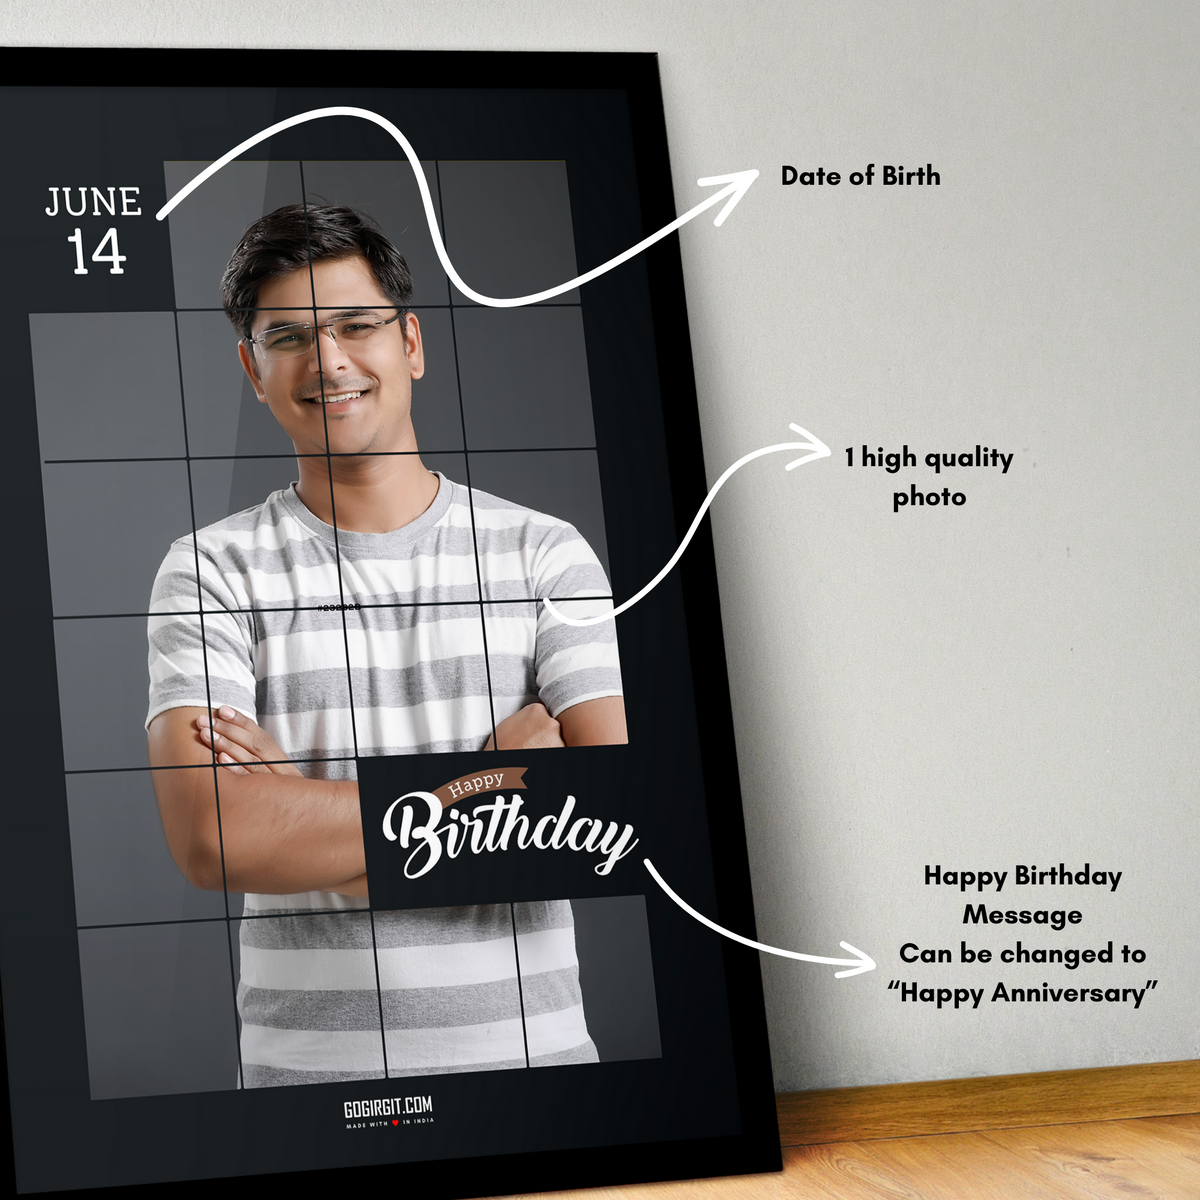 Happy-Birthday-Personalized-Photo-Frame-Description-Custom-Gift-by-Gogirgit